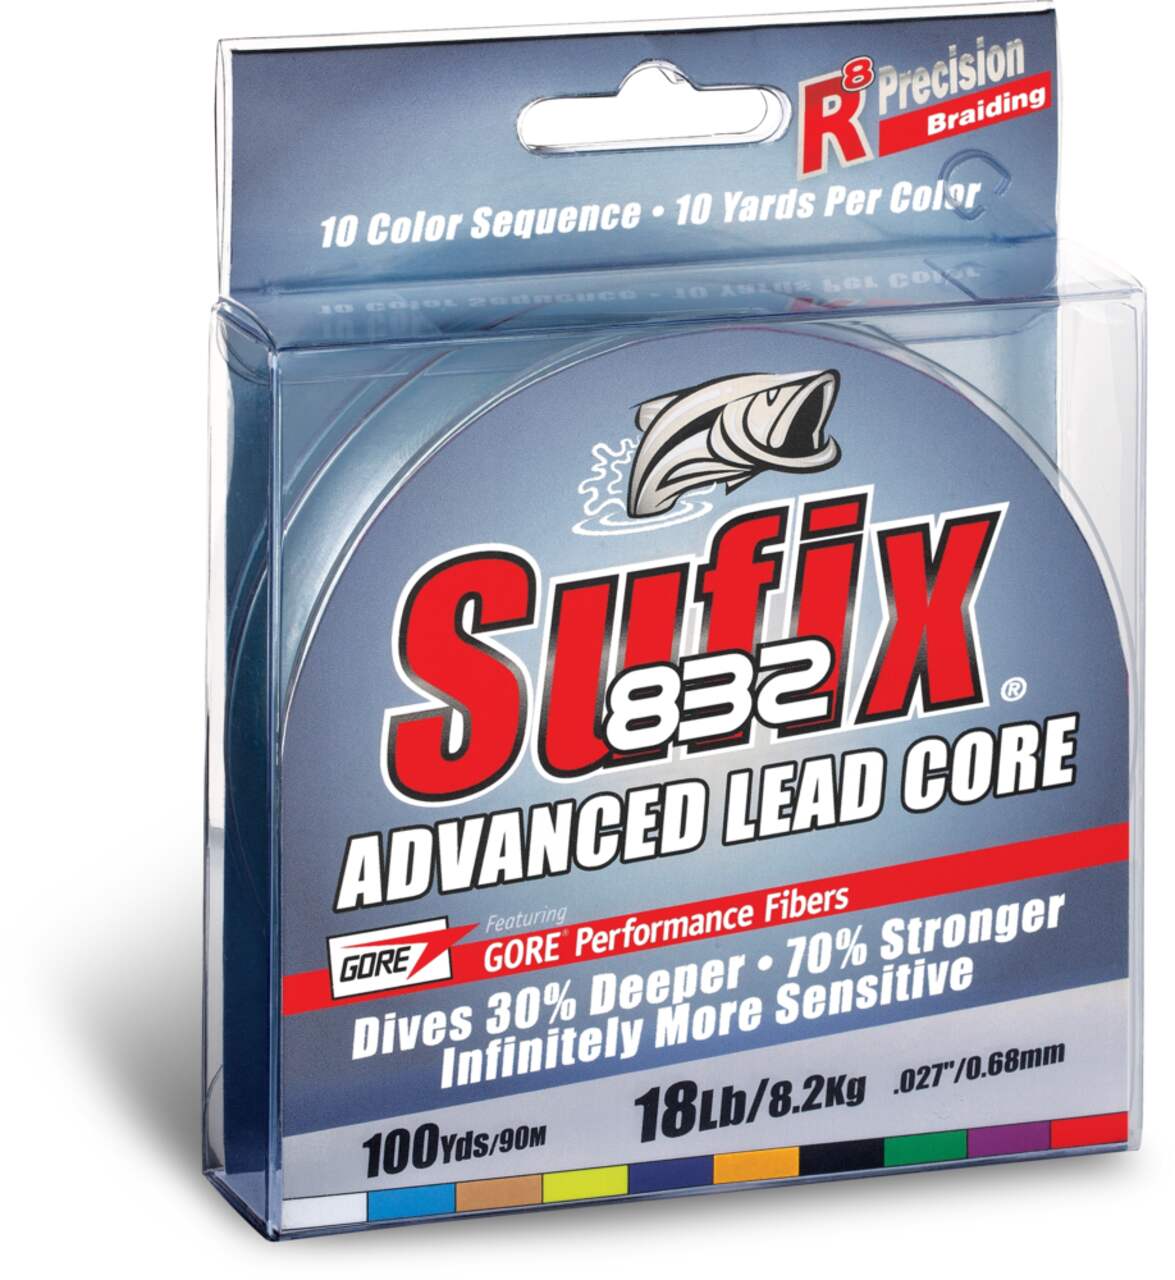 Sufix® 832 Advanced Lead Core Fishing Line, 100 yard